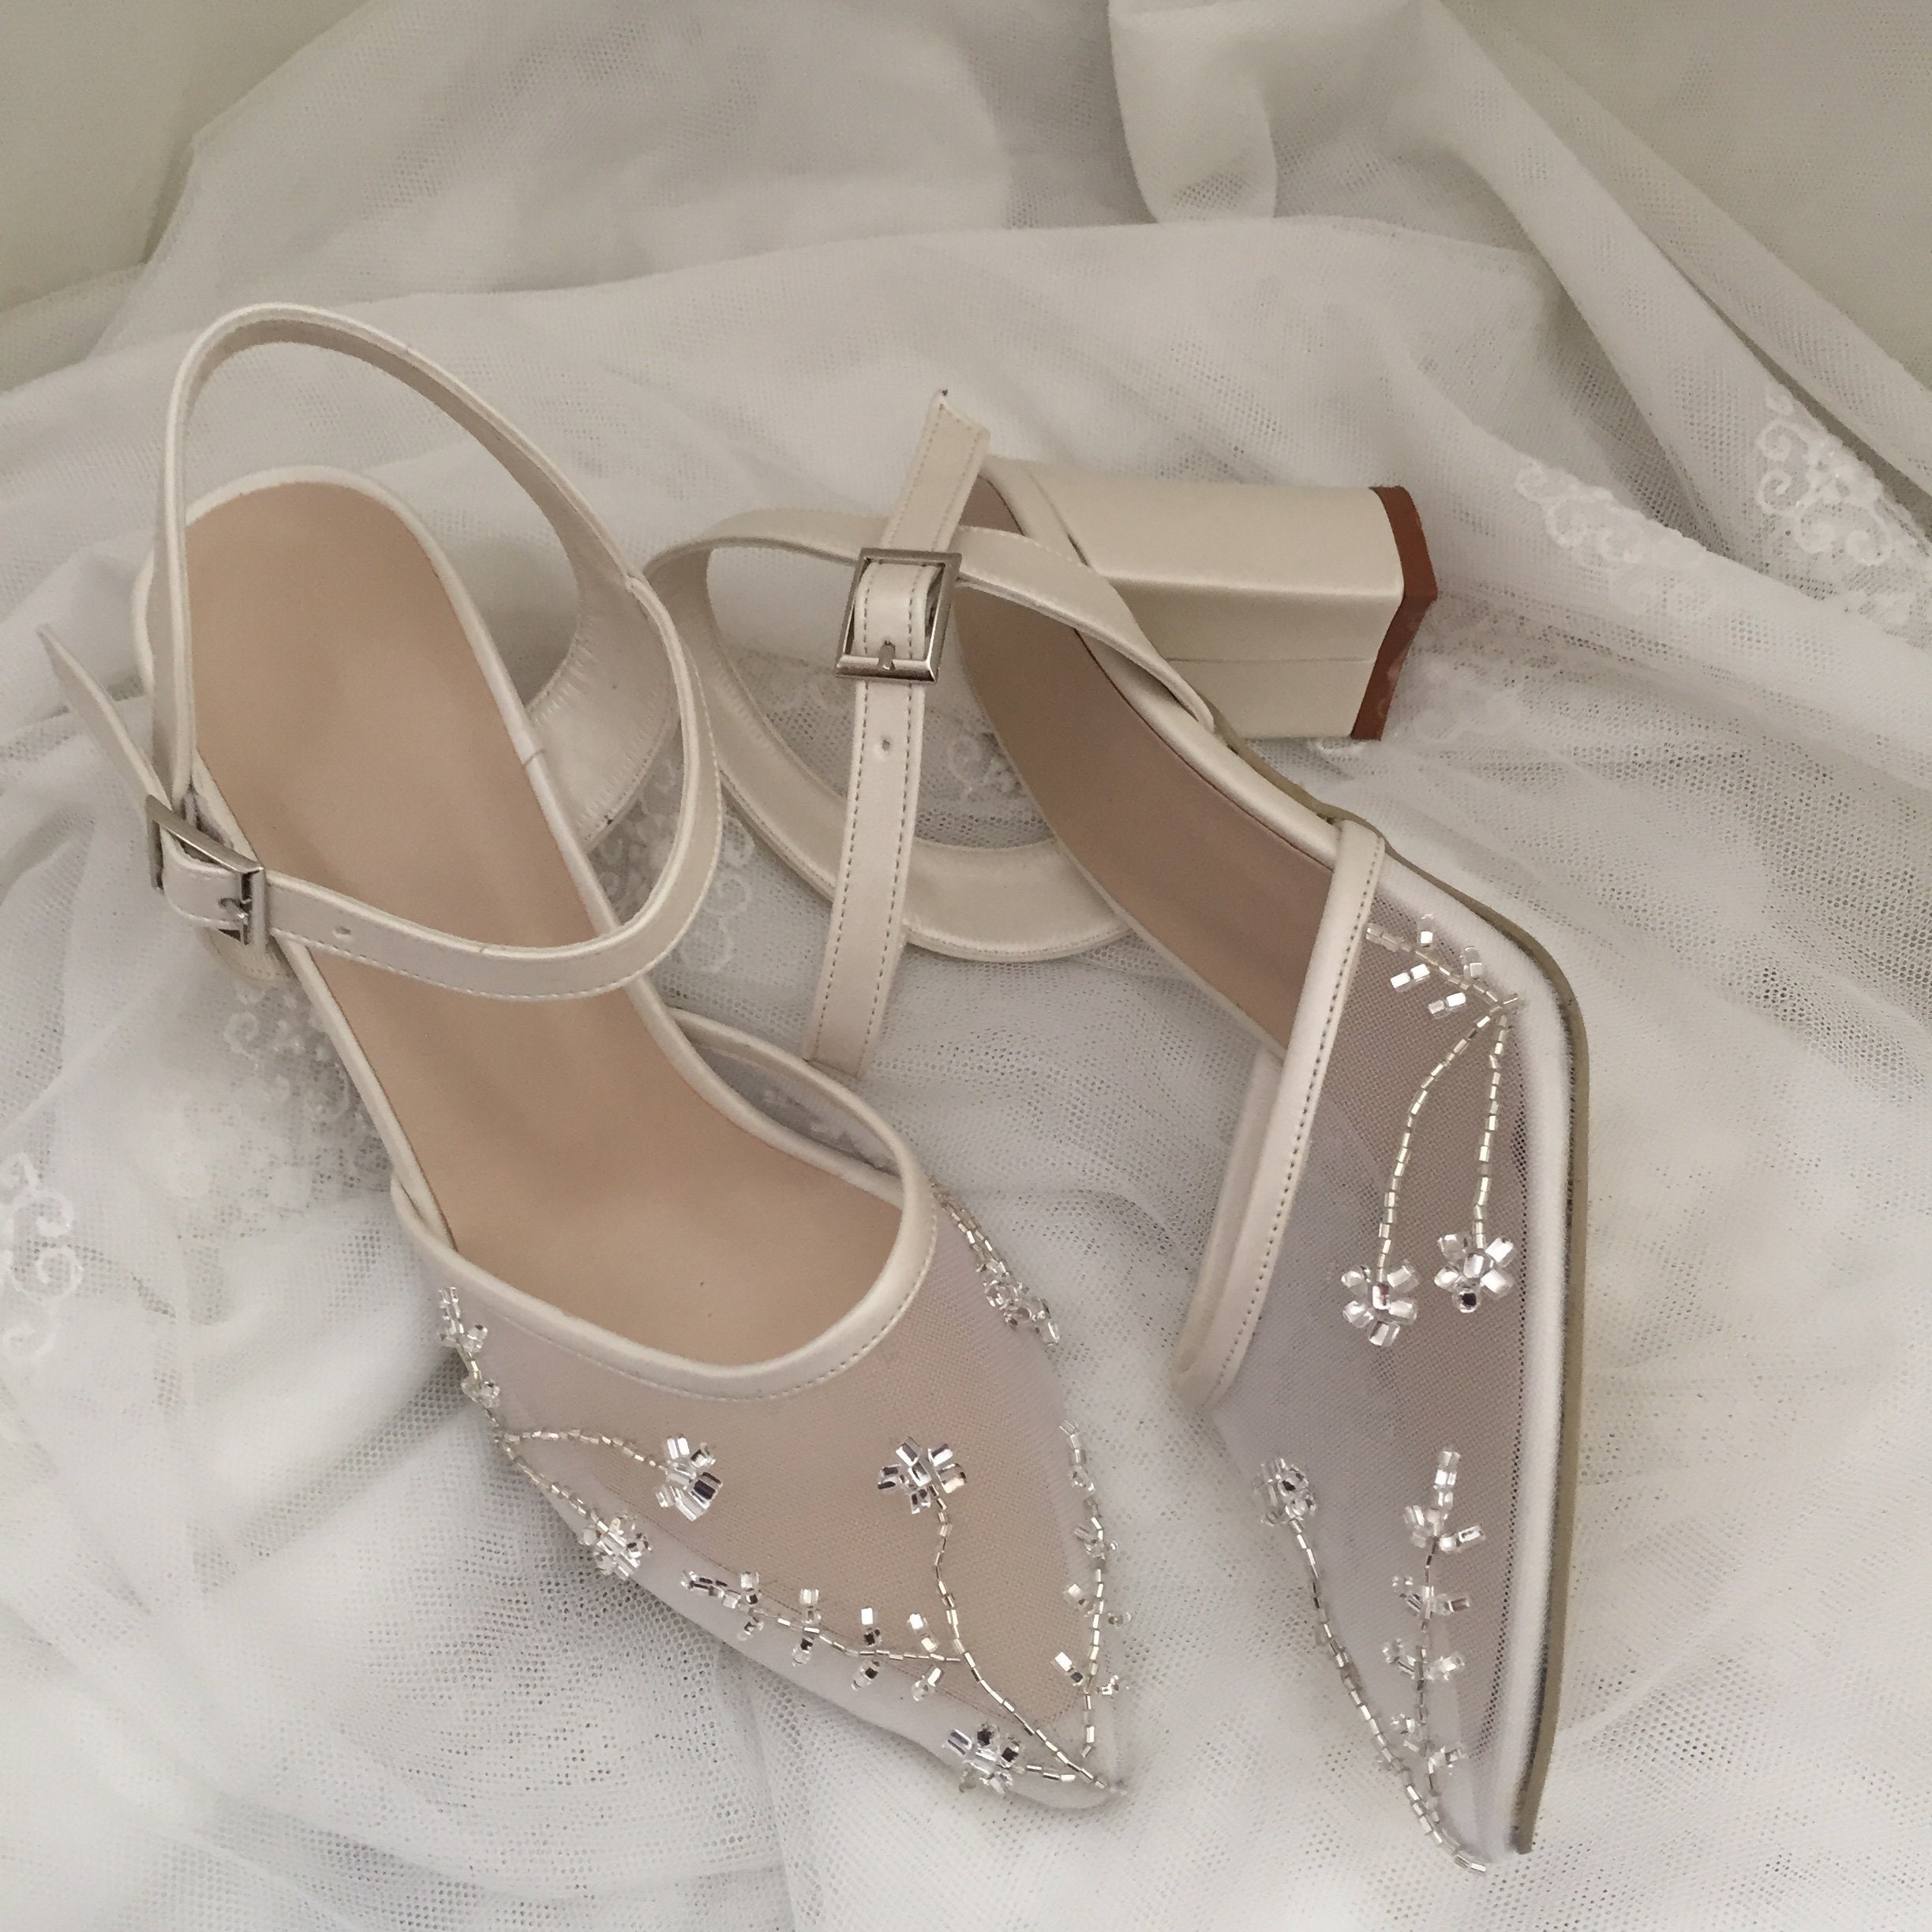 Evening Shoes with Stone Design, Wedding Shoes for Women, Light Beige Stilettos with Swarovski Stone, Stylish Stiletto Heel Bridal Shoes